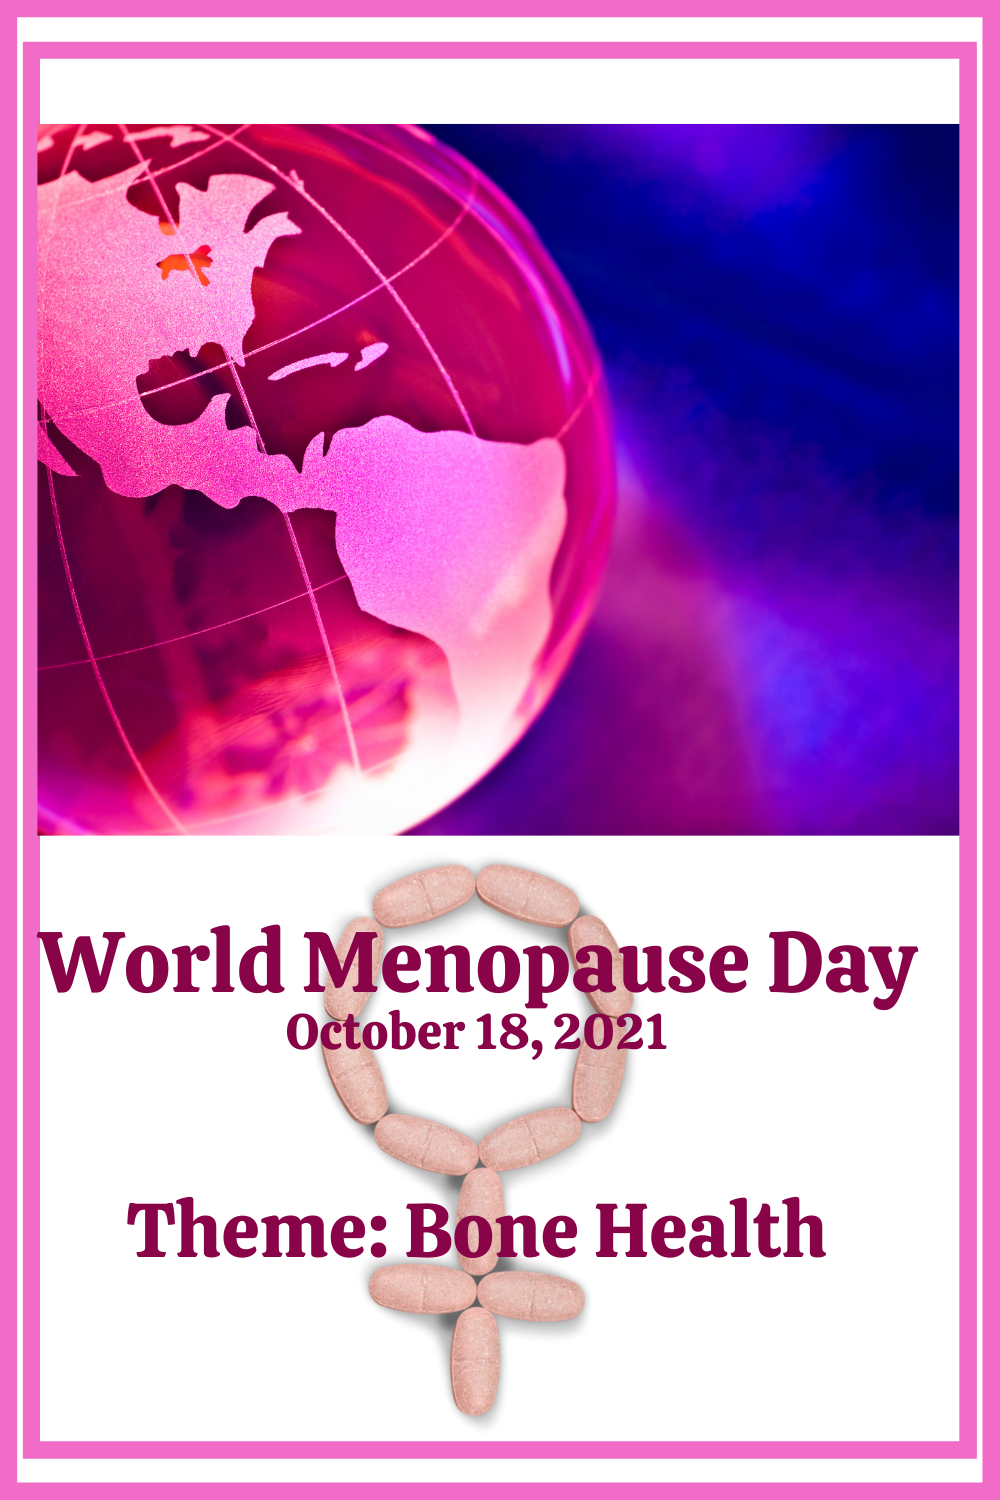 World Menopause Day 2021: Bone Health